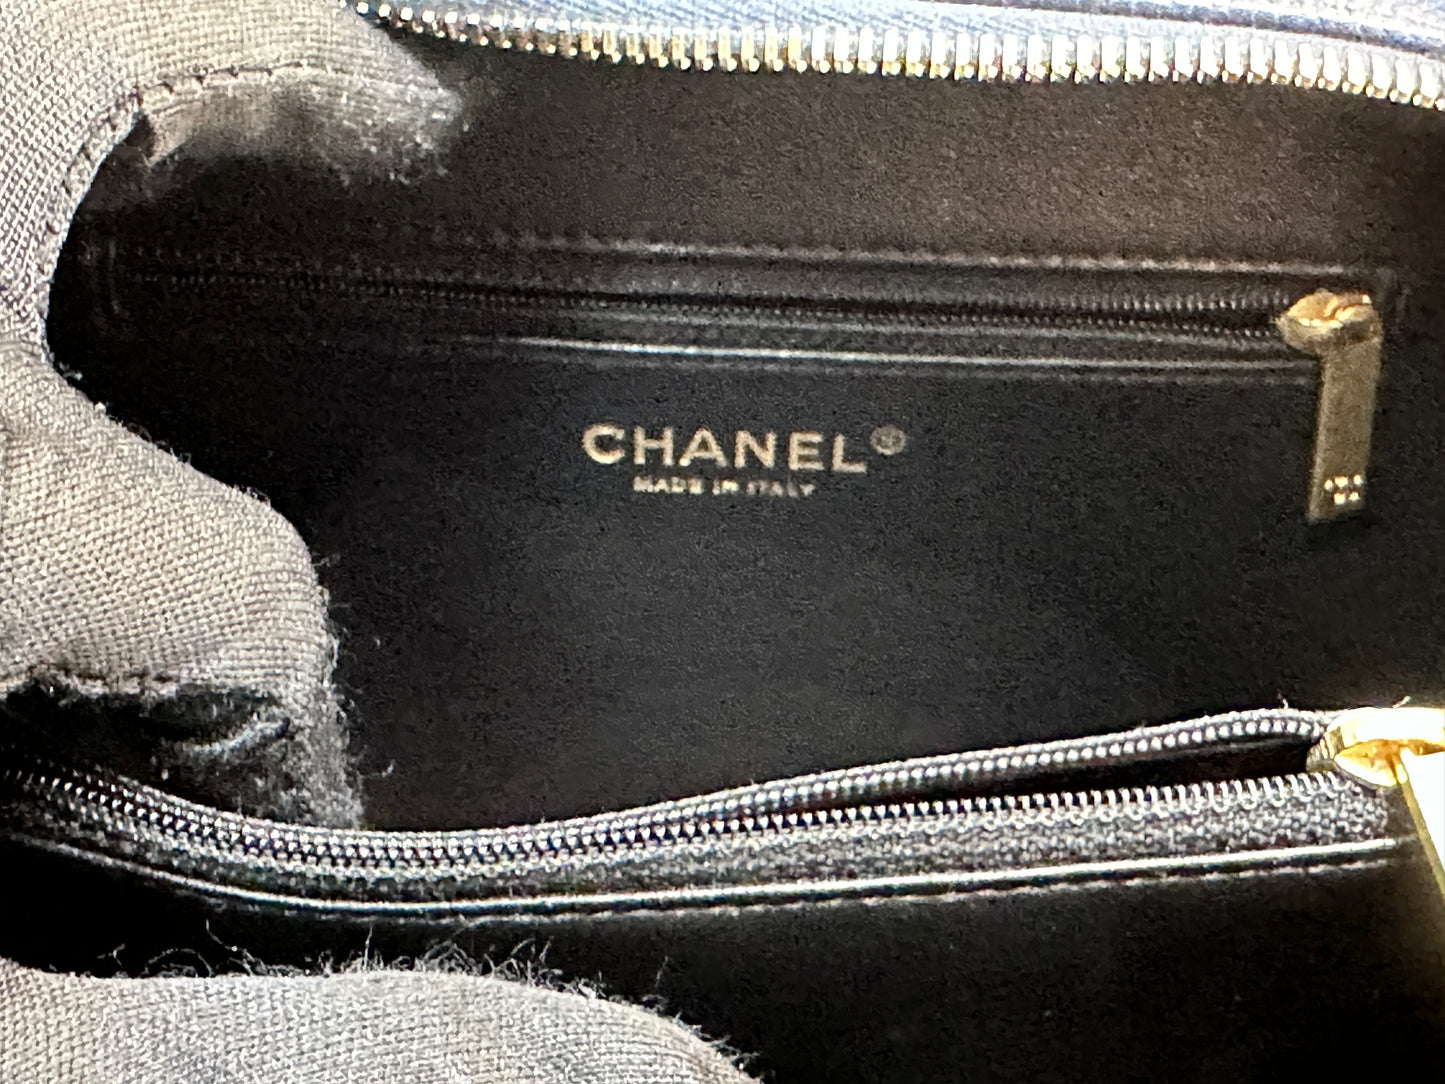 Chanel Filigree Vanity Case Quilted Caviar Medium Blue